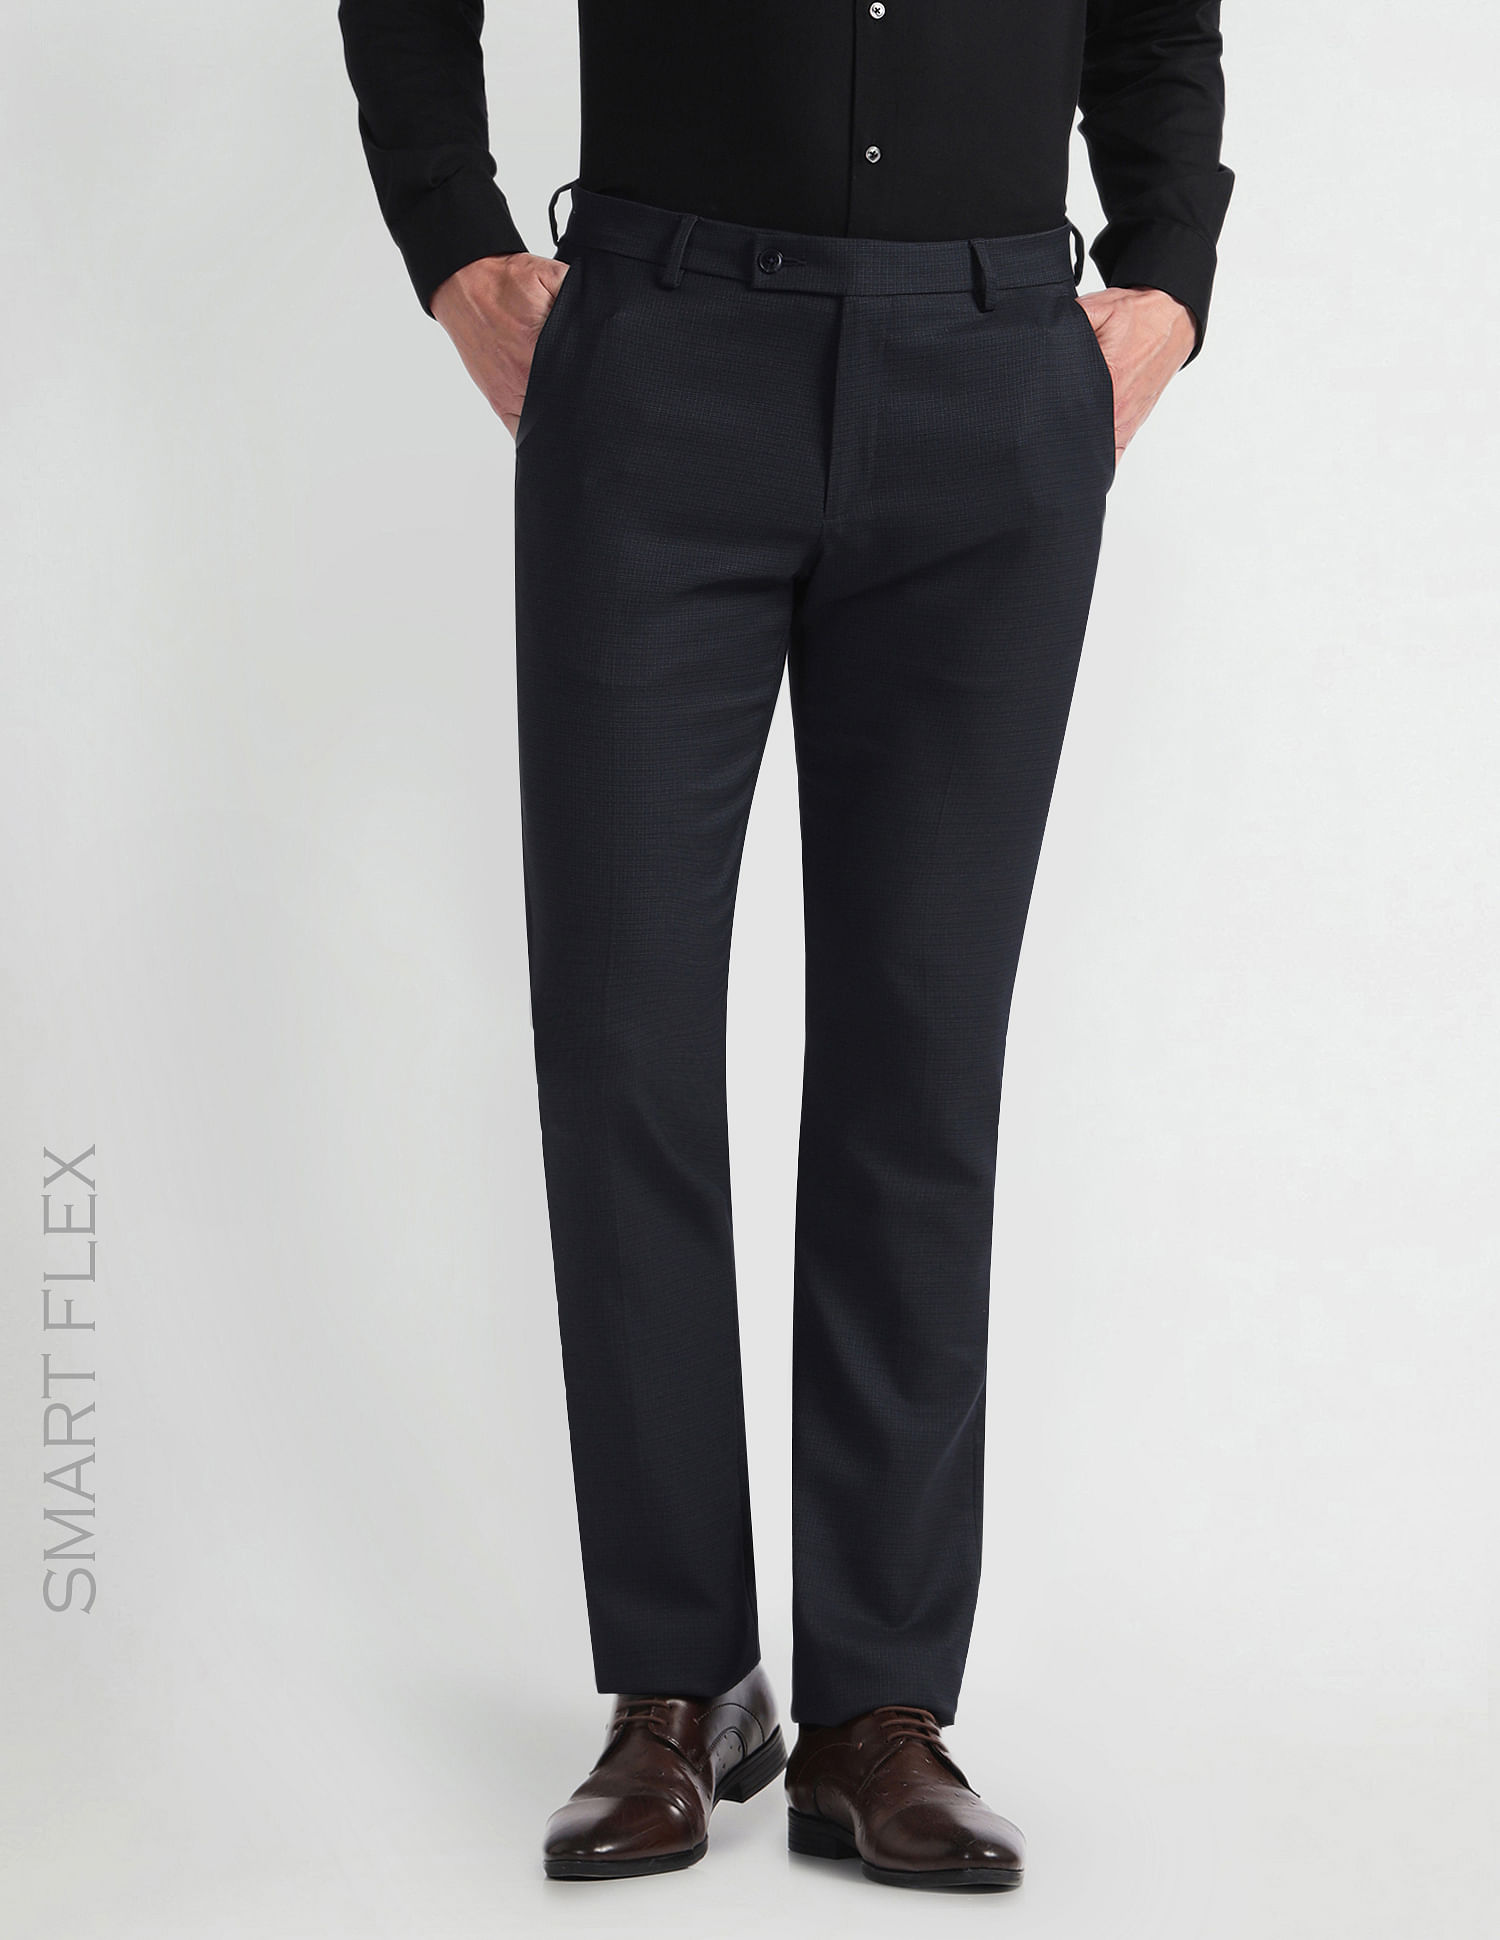 Buy ARROW Mens Autoflex Waist Regular Fit Trousers | Shoppers Stop